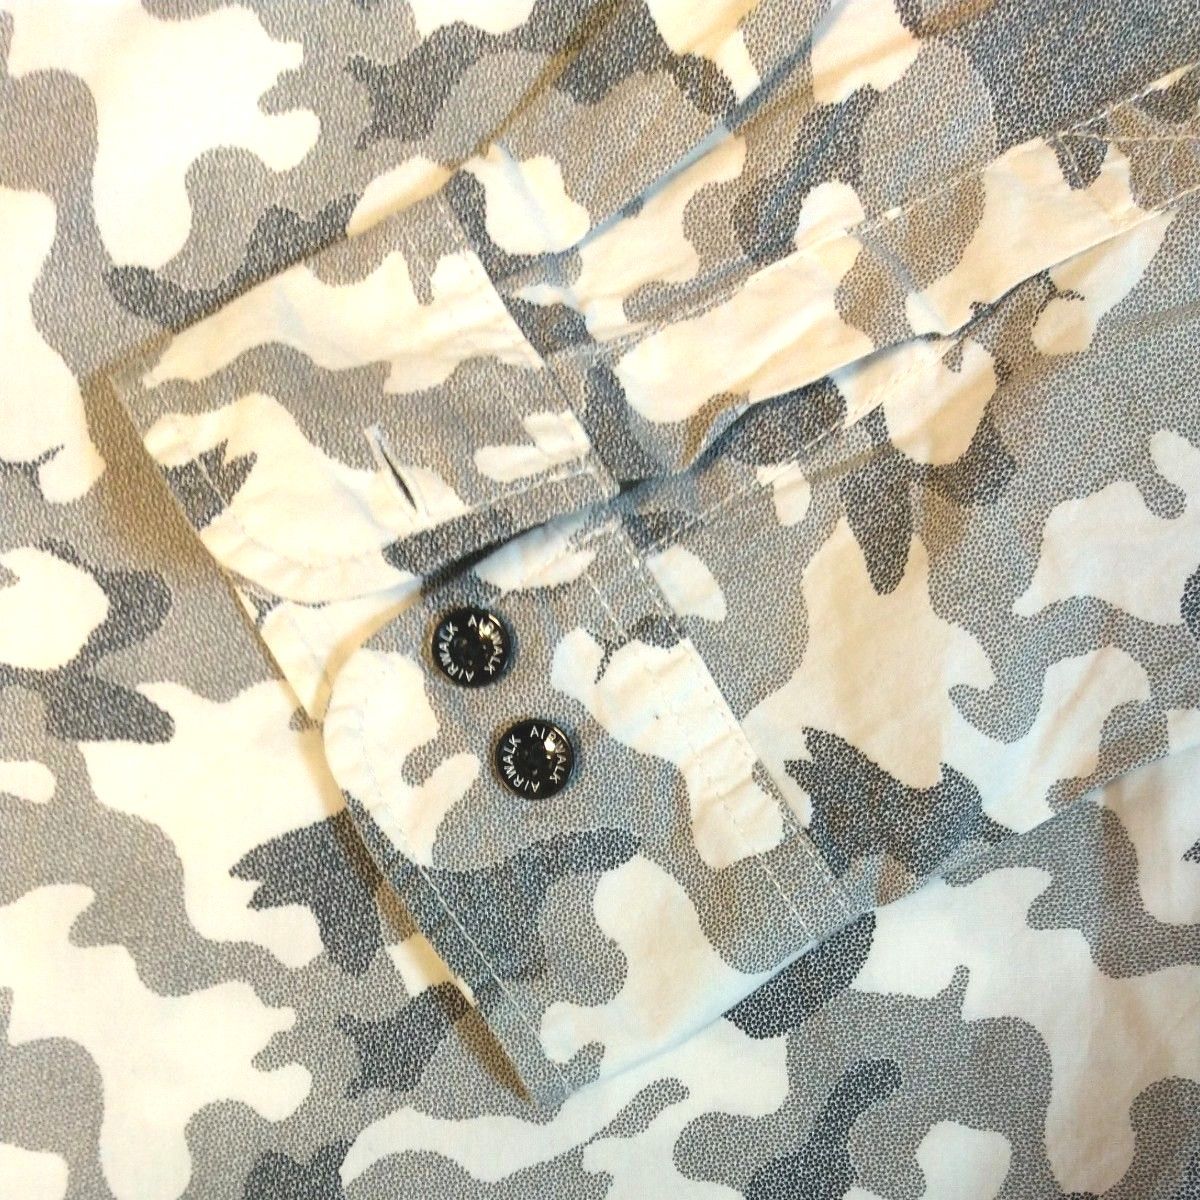 ★AIRWALK★ メンズ 3L グレー系 カモフラ柄 迷彩 長袖シャツ 大きいサイズ カジュアルシャツ